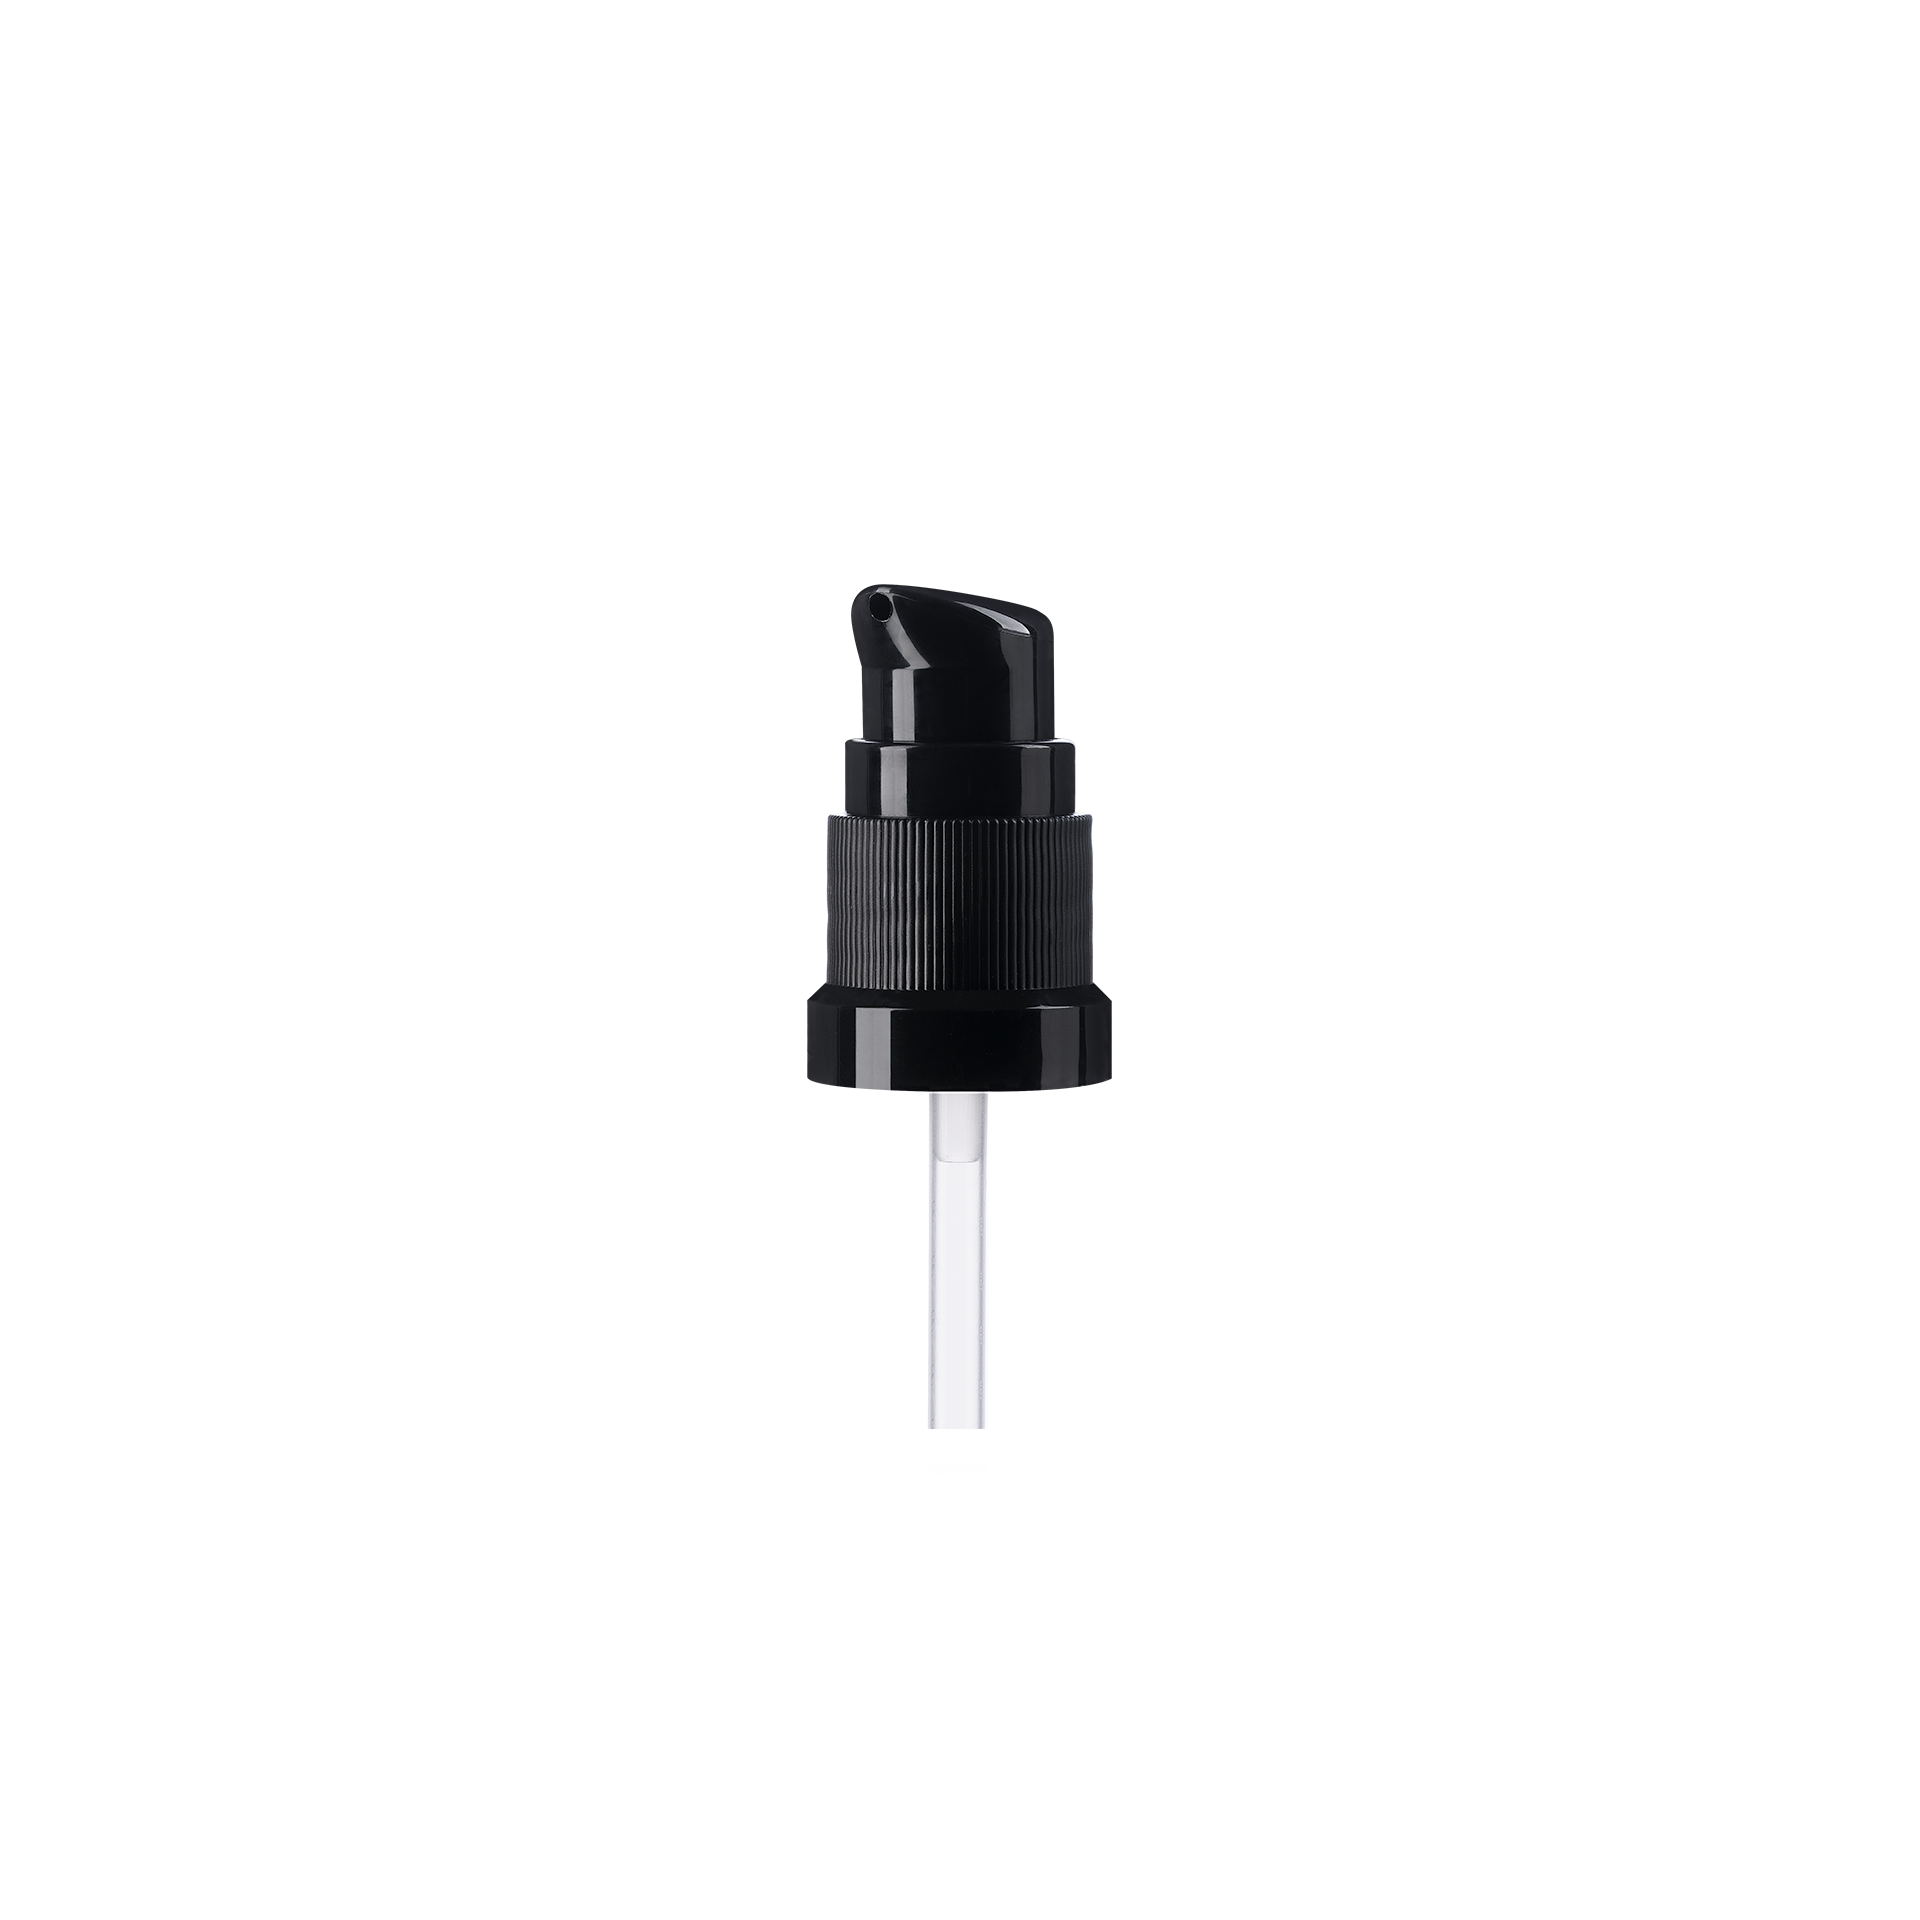 Lotion pump Metropolitan DIN18, PP, black, dose 0.10ml, black security clip (Ginger 15)